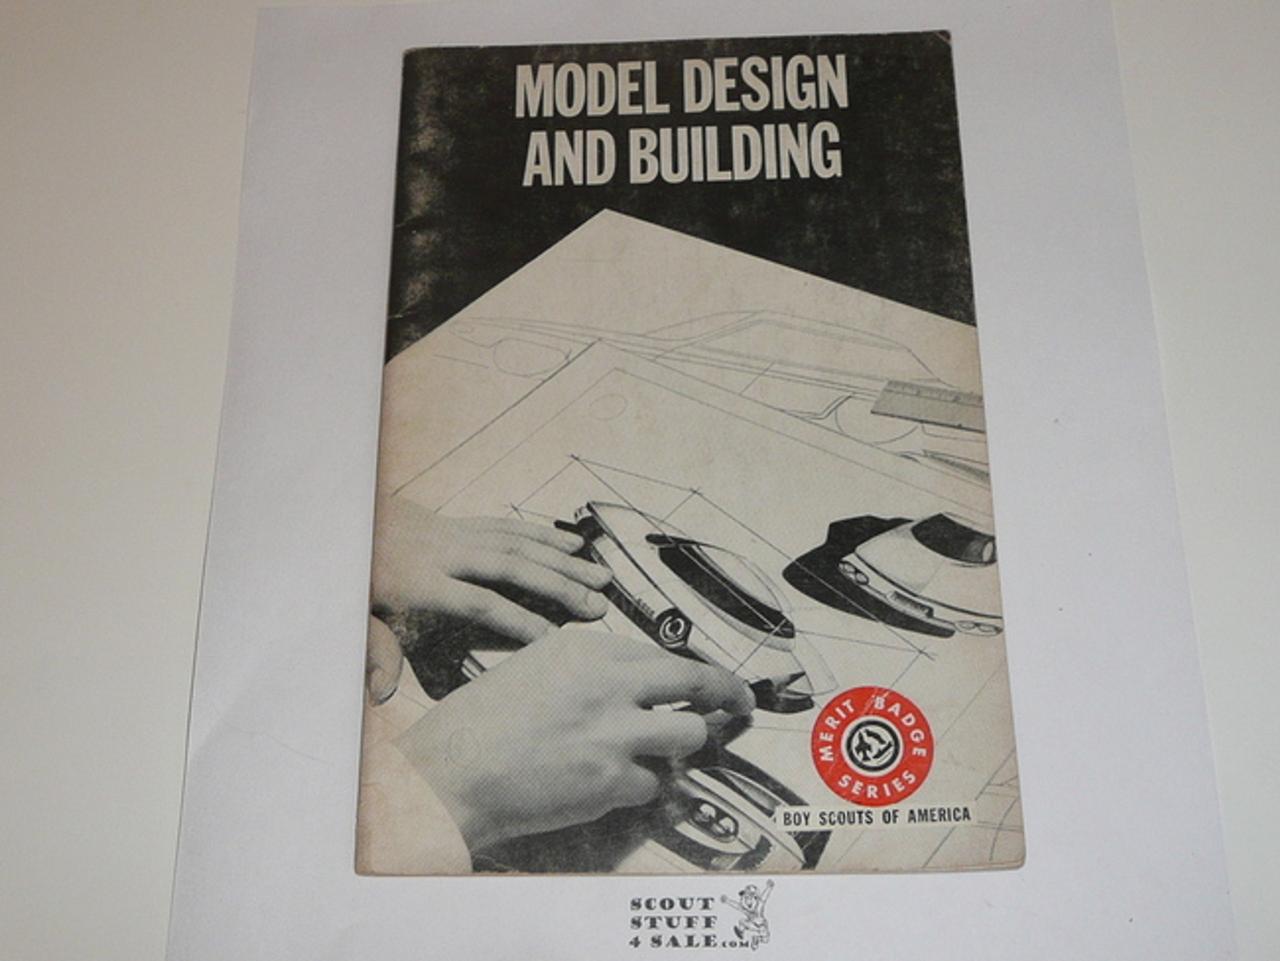 Model design and building merit badge